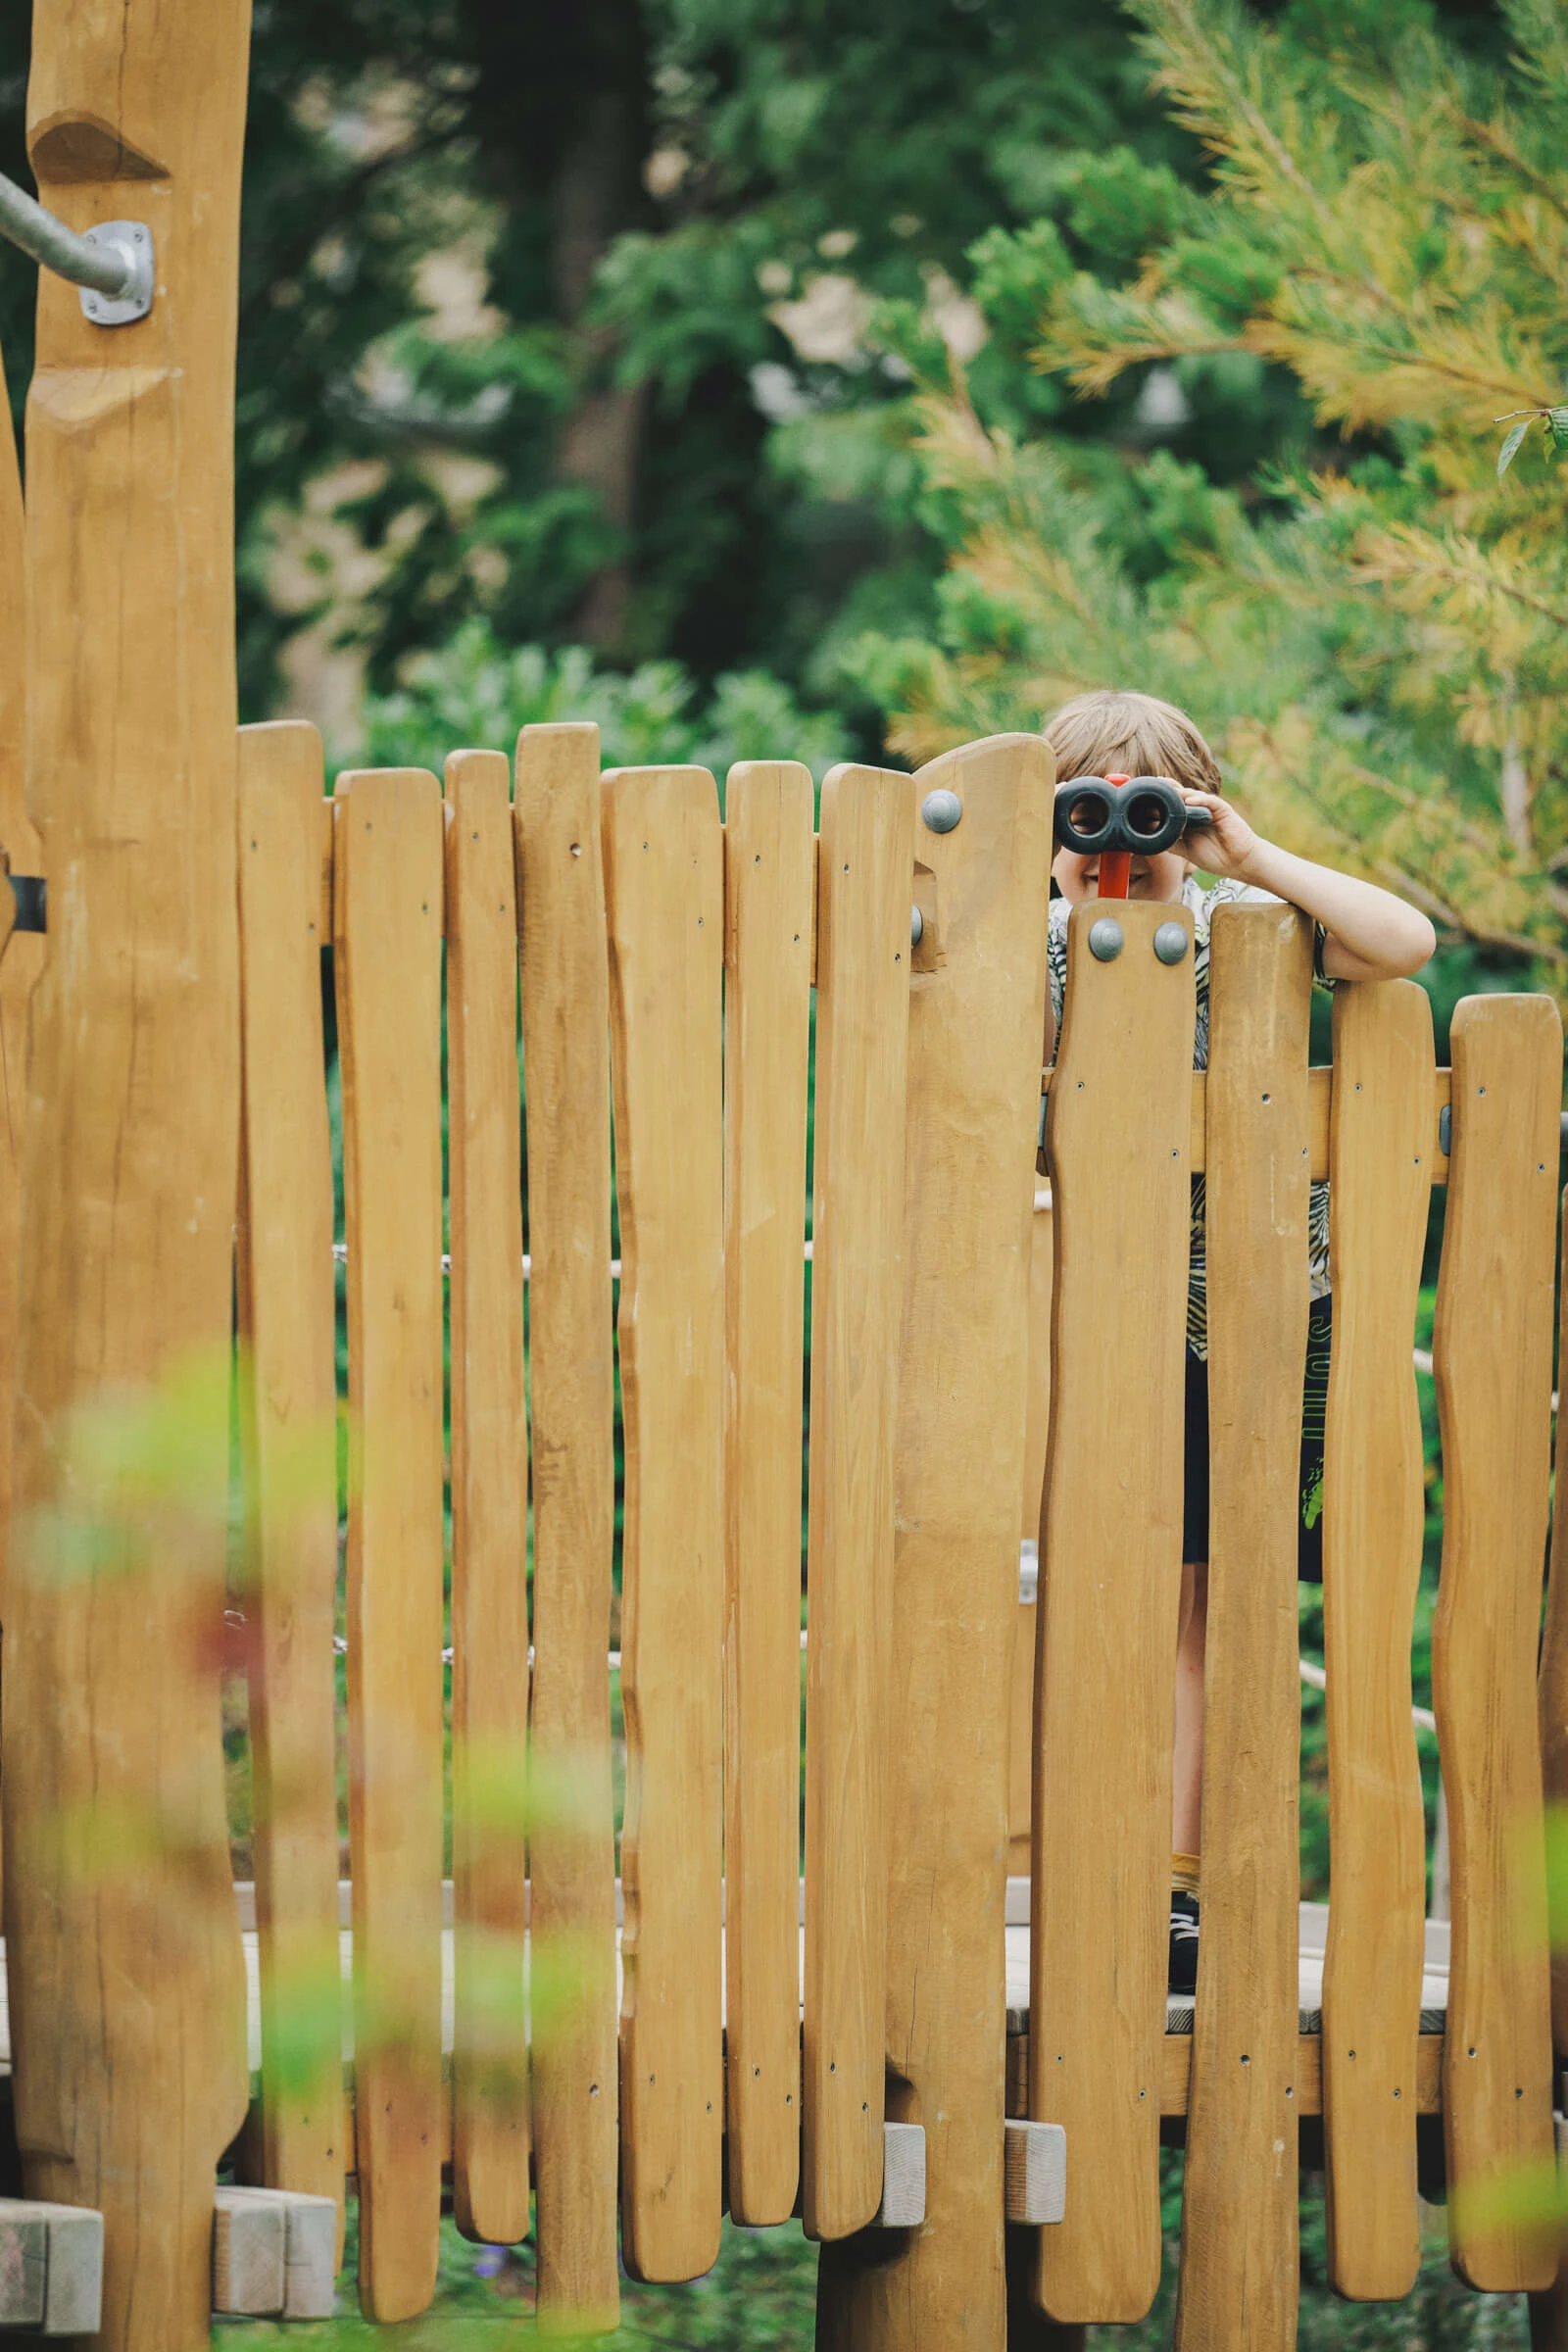 niña mirando con prismáticos en un parque infantil de madera